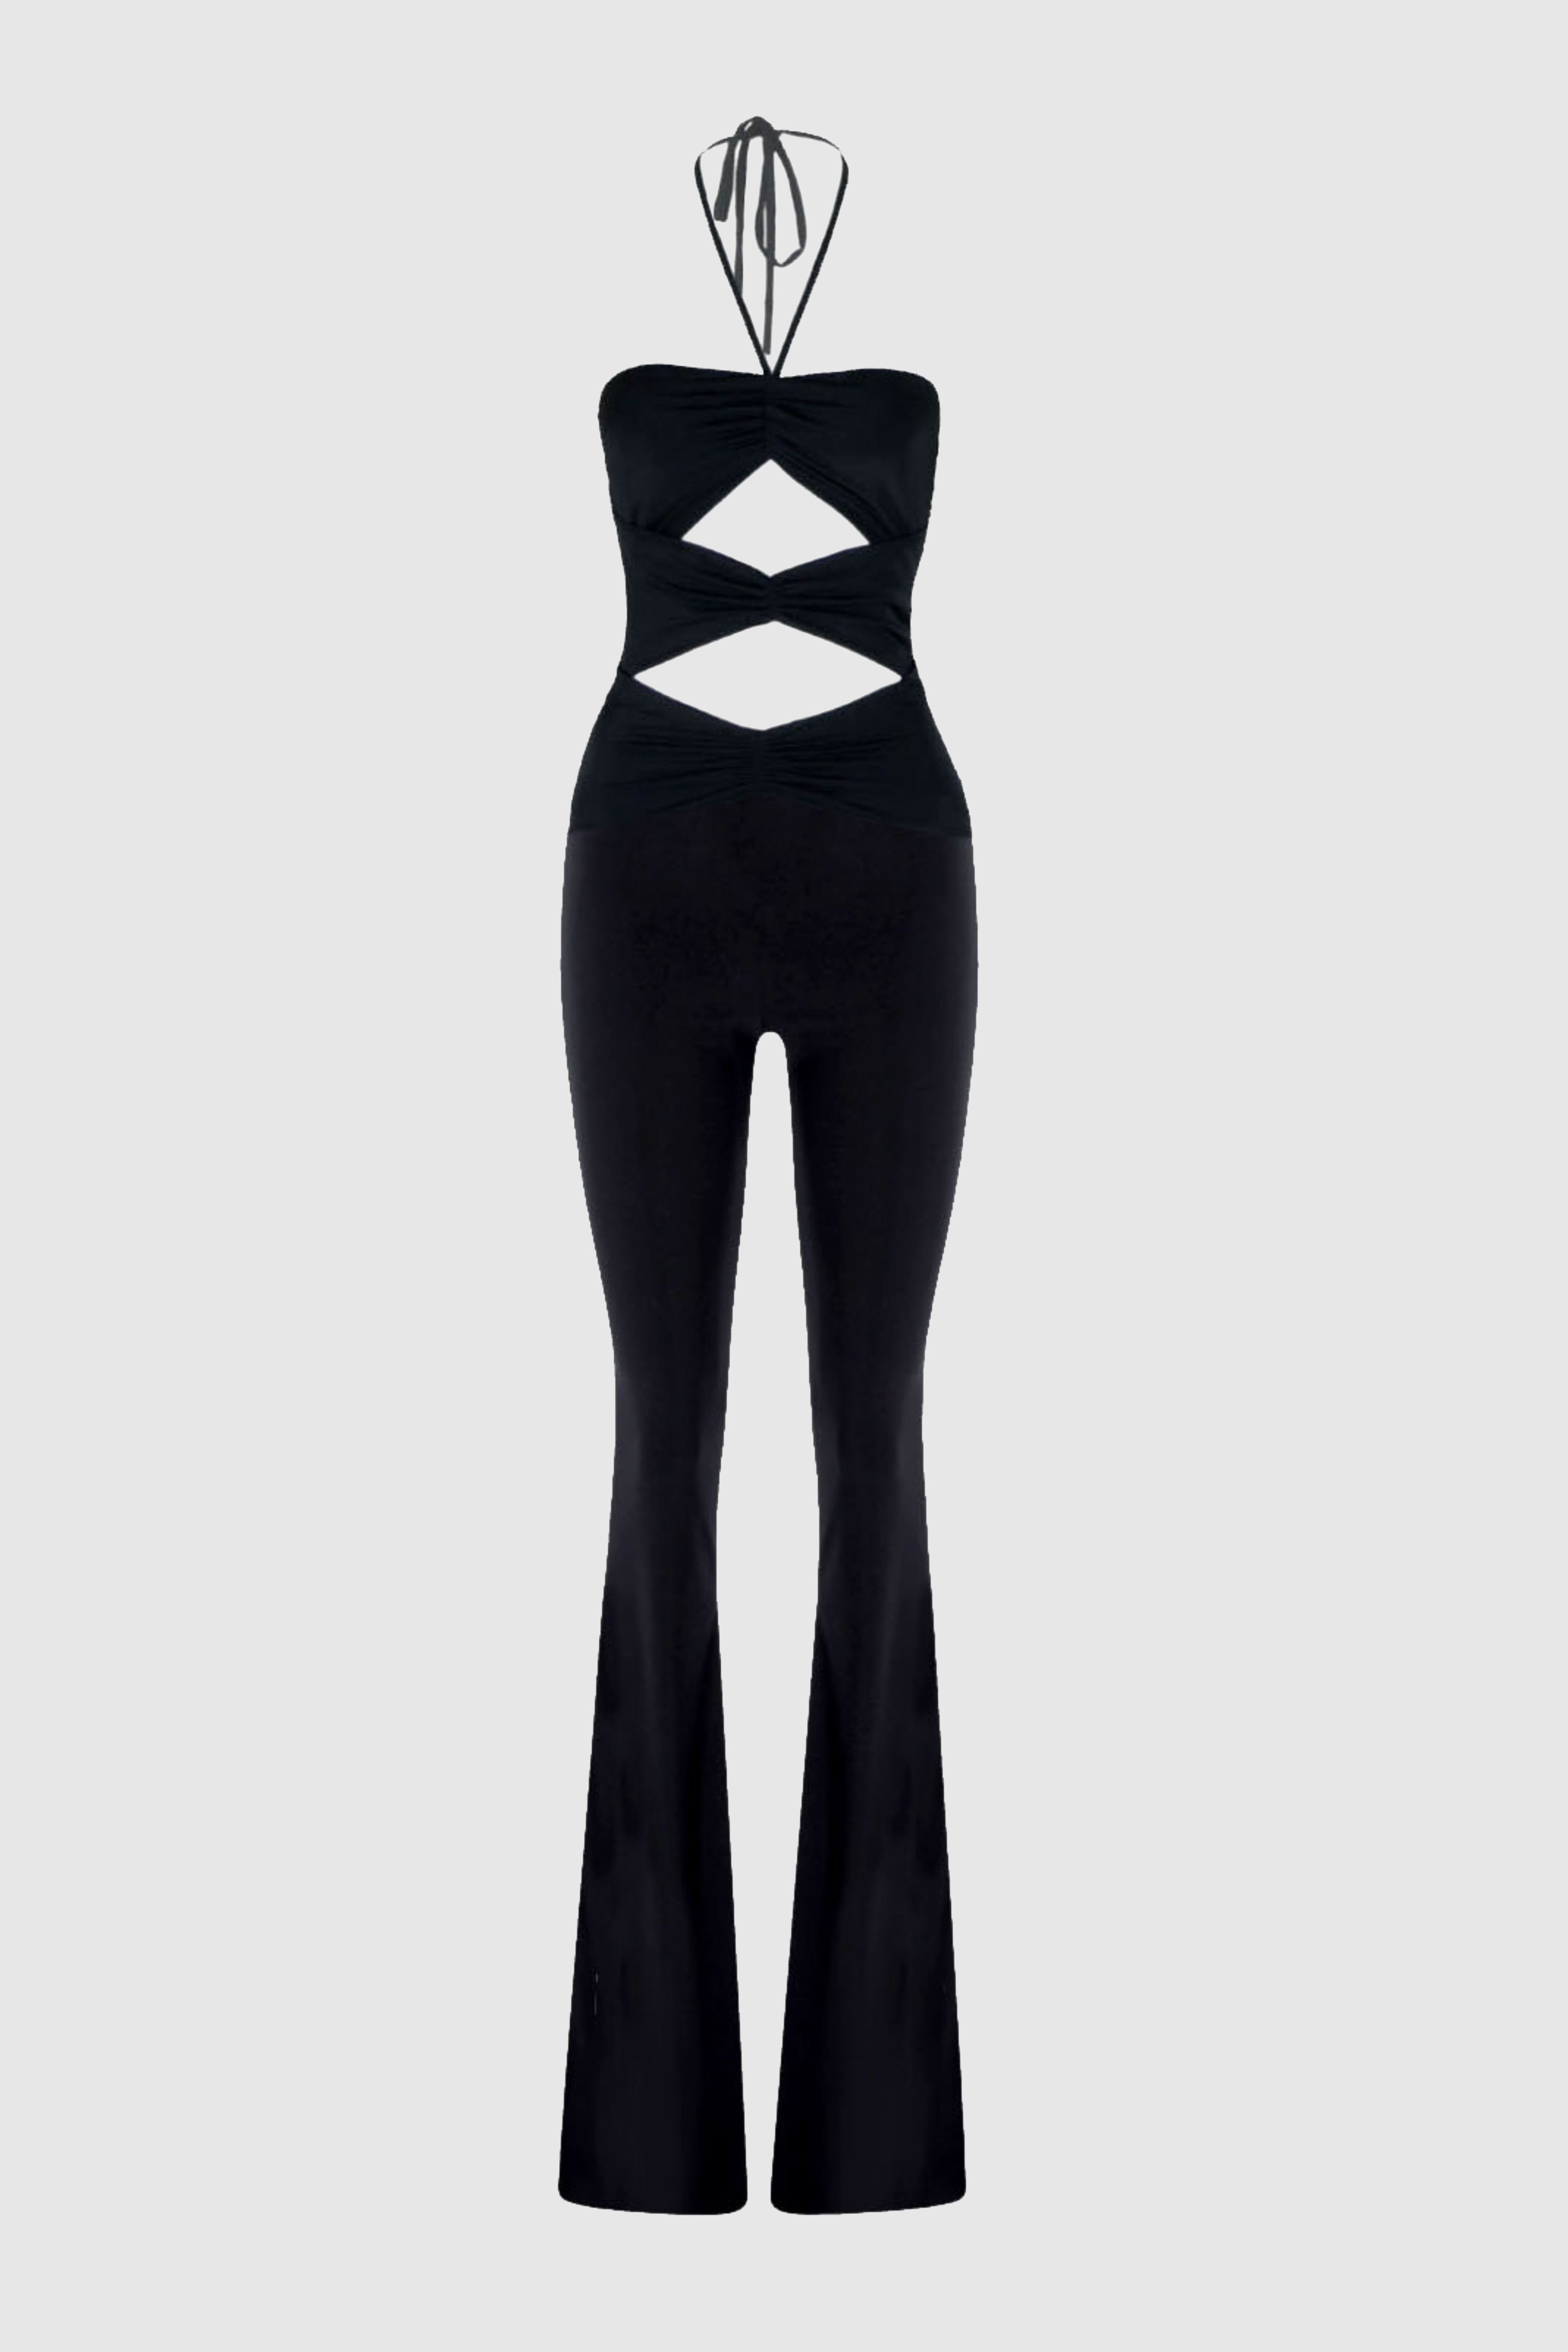 Stella Cutout Black Jumpsuit